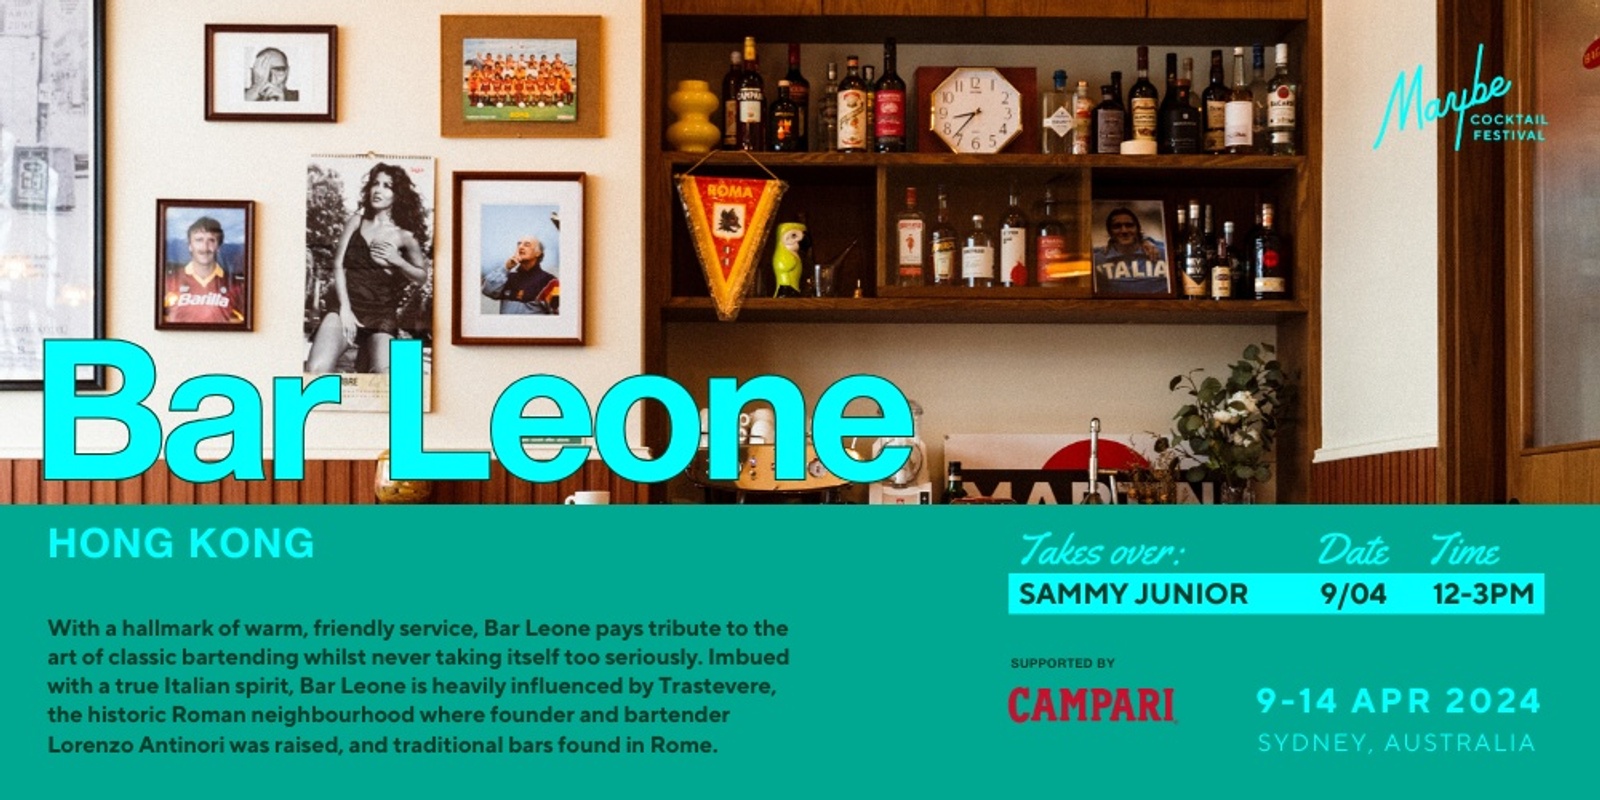 Banner image for Maybe Cocktail Festival: Bar Leone Takes Over Sammy Junior